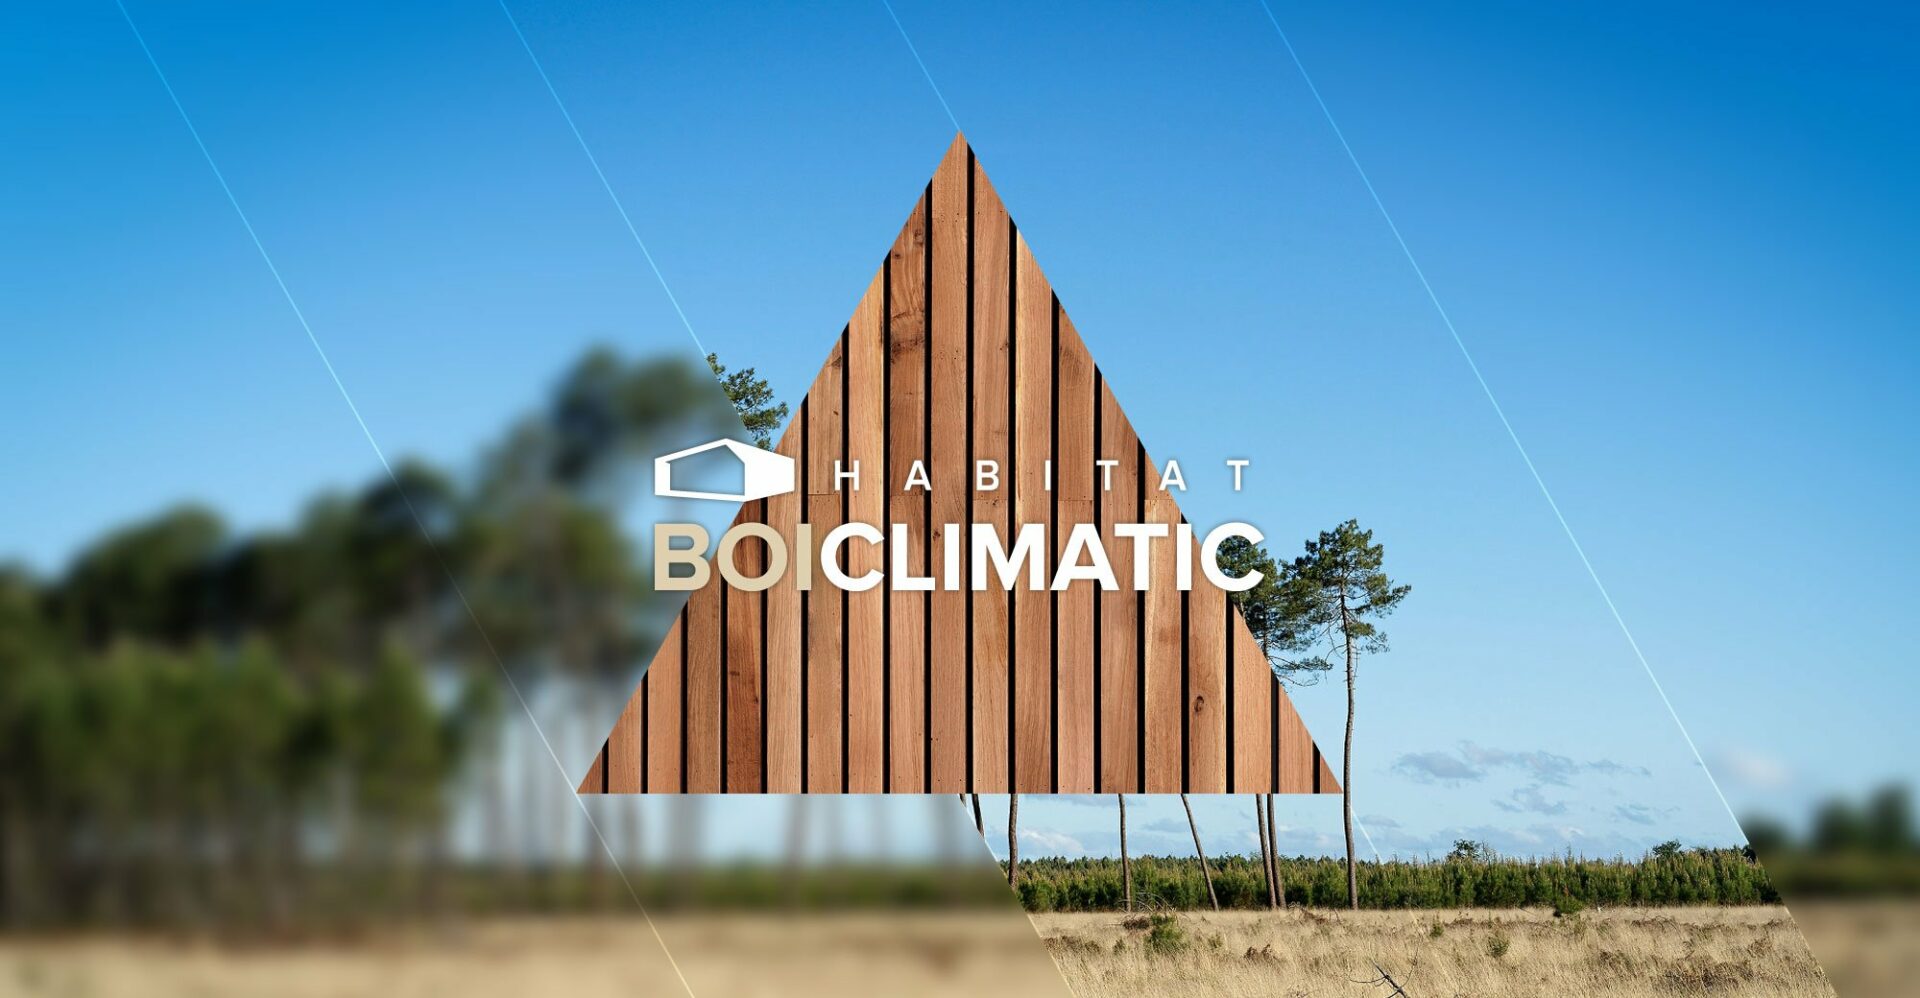 Habitat boiclimatic